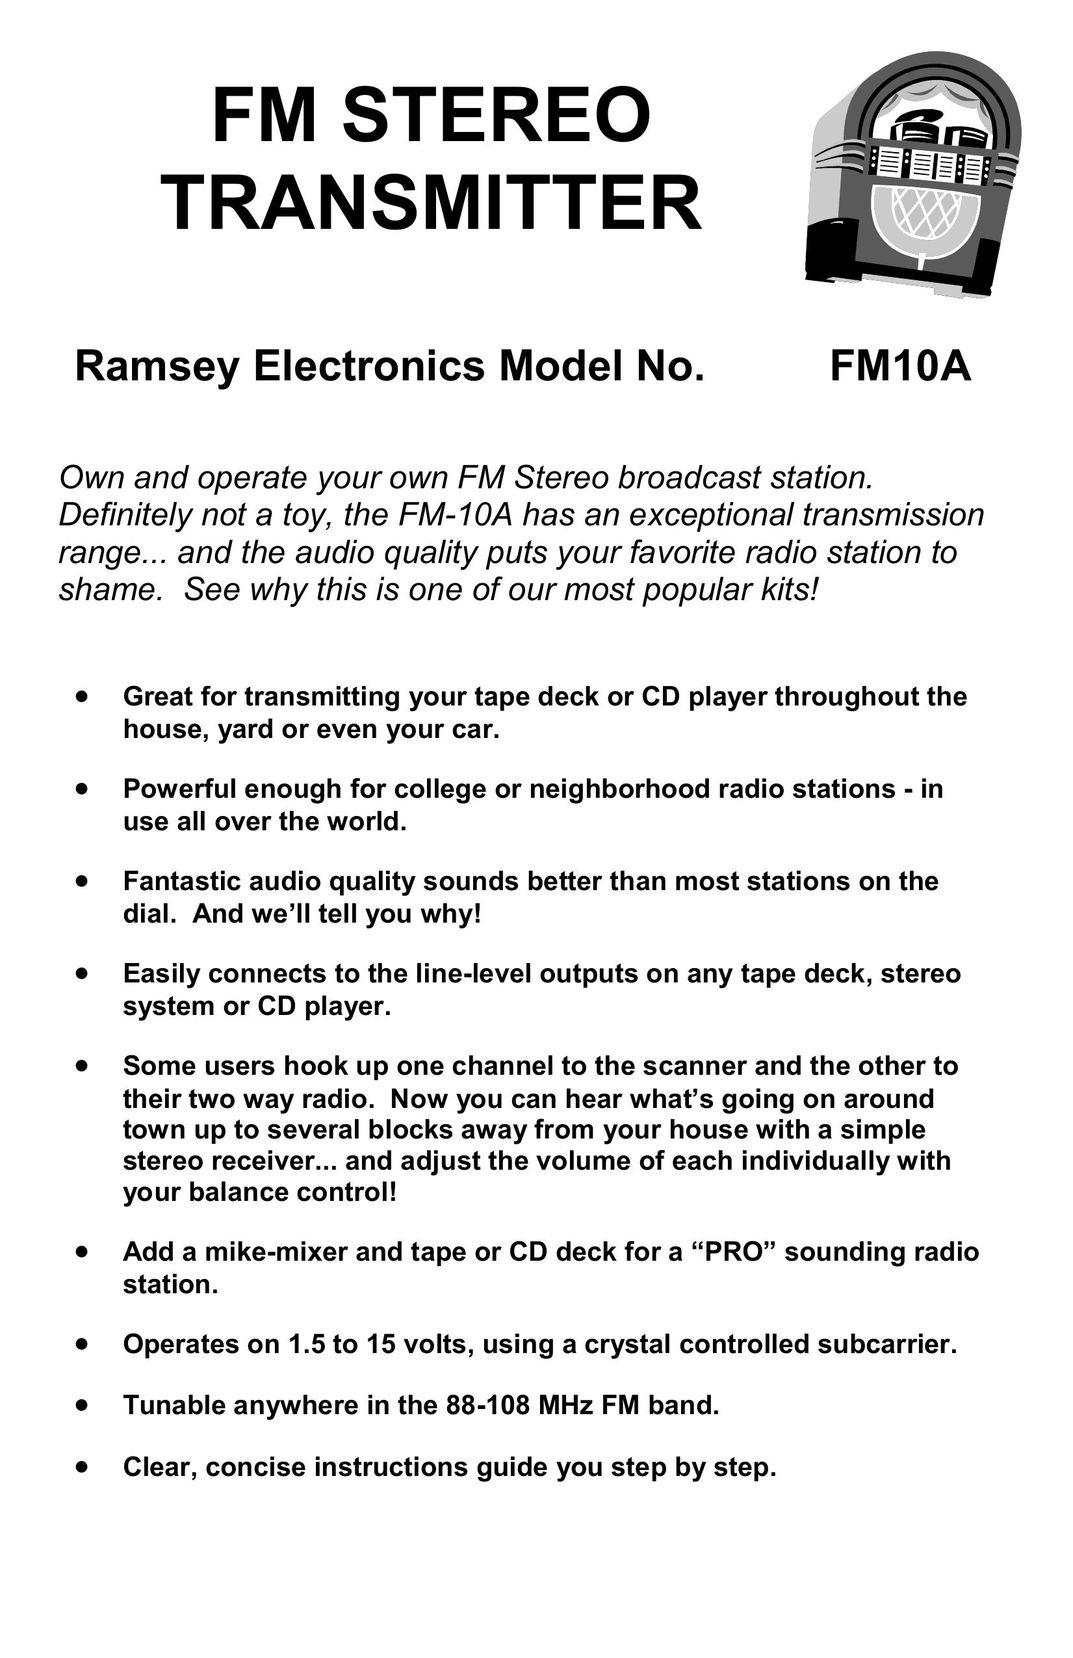 Ramsey Electronics FM10A Satellite Radio User Manual